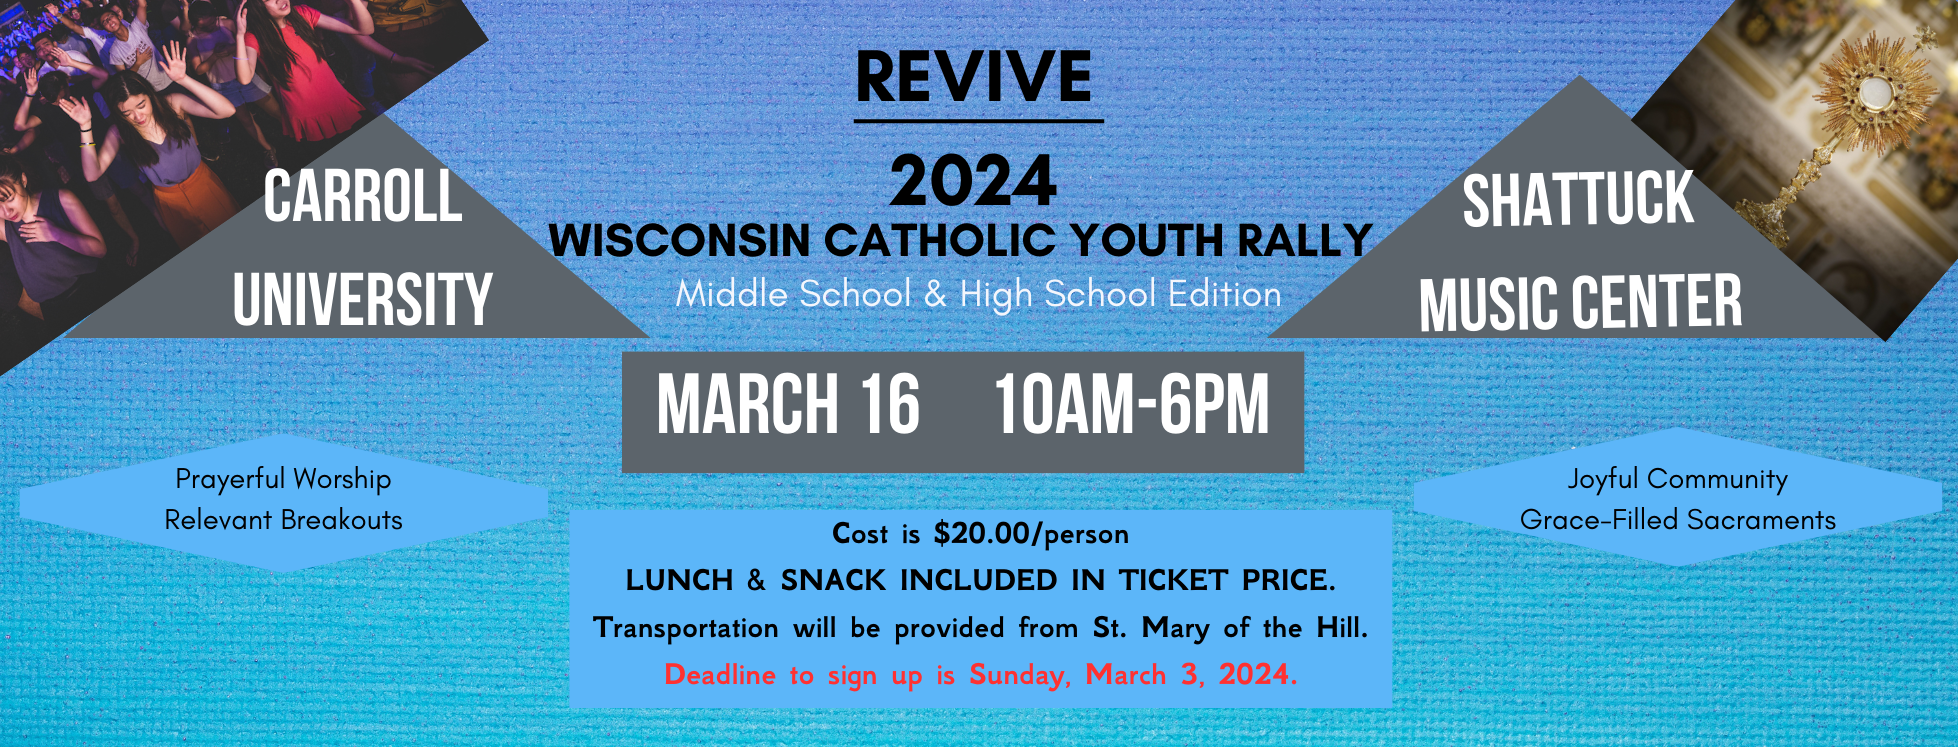 WI Catholic Youth Rally